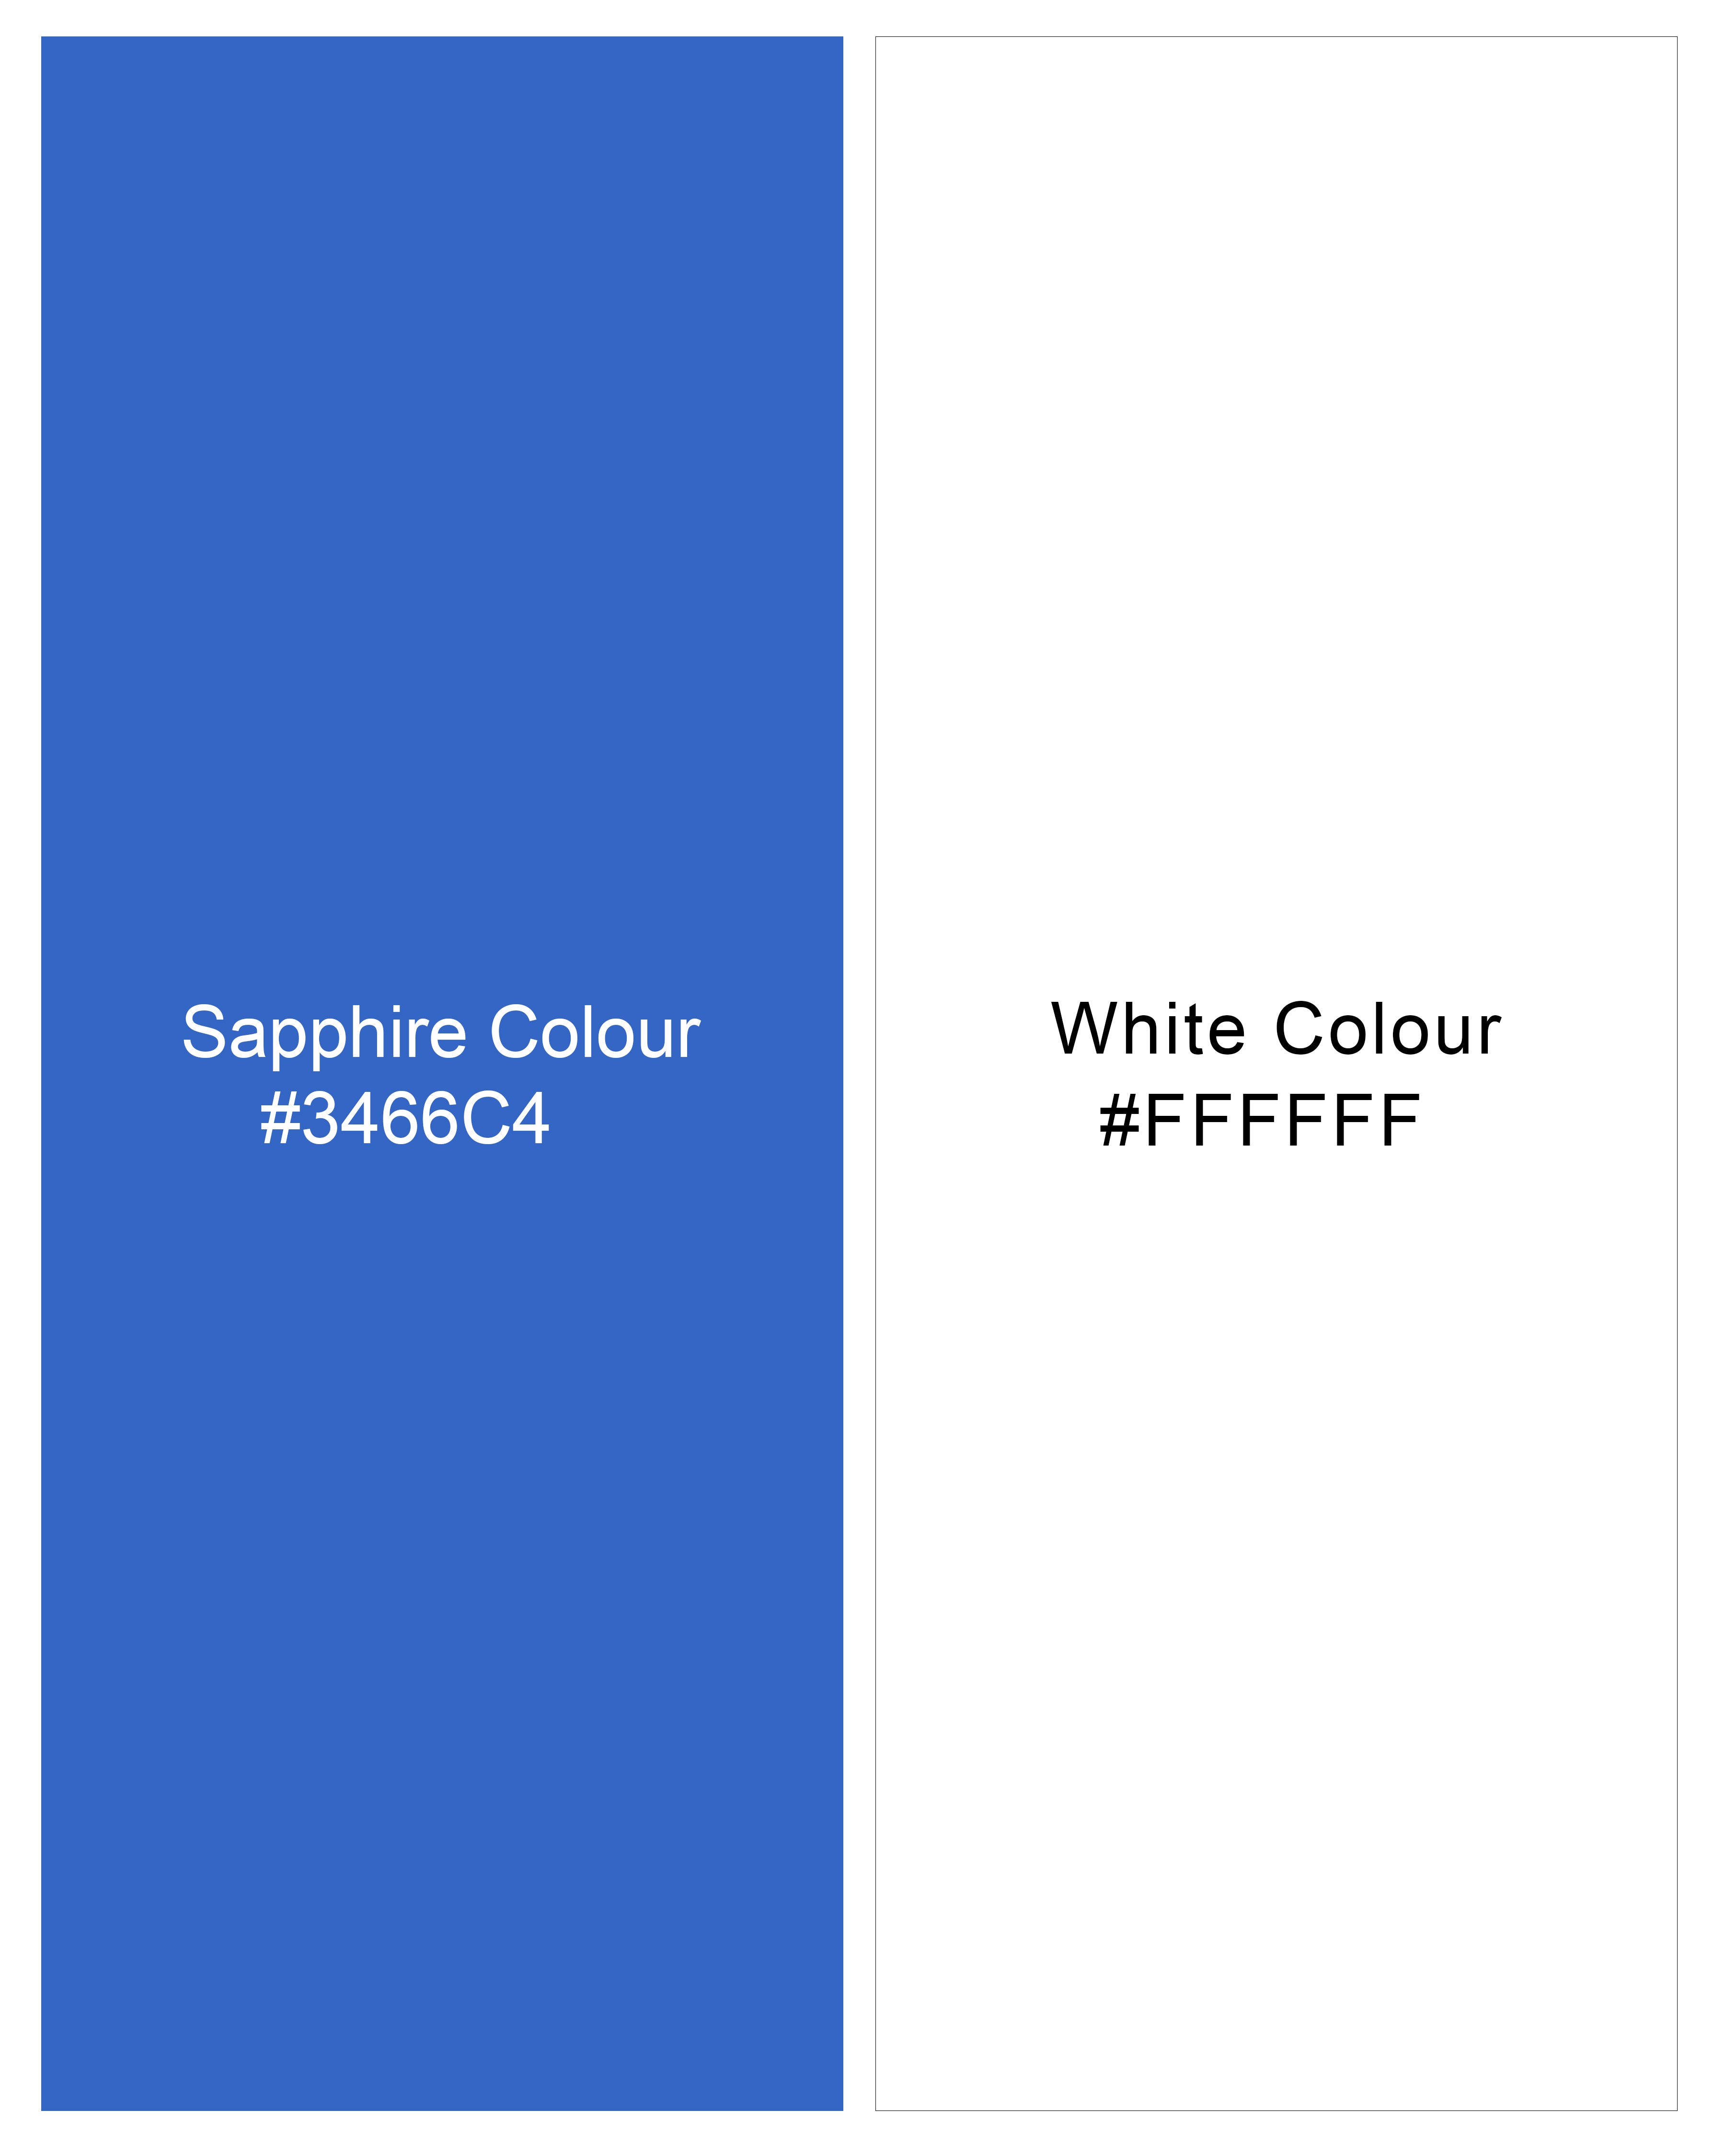 Sapphire Blue and White Checked Premium Cotton Shirt  8748-38,8748-H-38,8748-39,8748-H-39,8748-40,8748-H-40,8748-42,8748-H-42,8748-44,8748-H-44,8748-46,8748-H-46,8748-48,8748-H-48,8748-50,8748-H-50,8748-52,8748-H-52